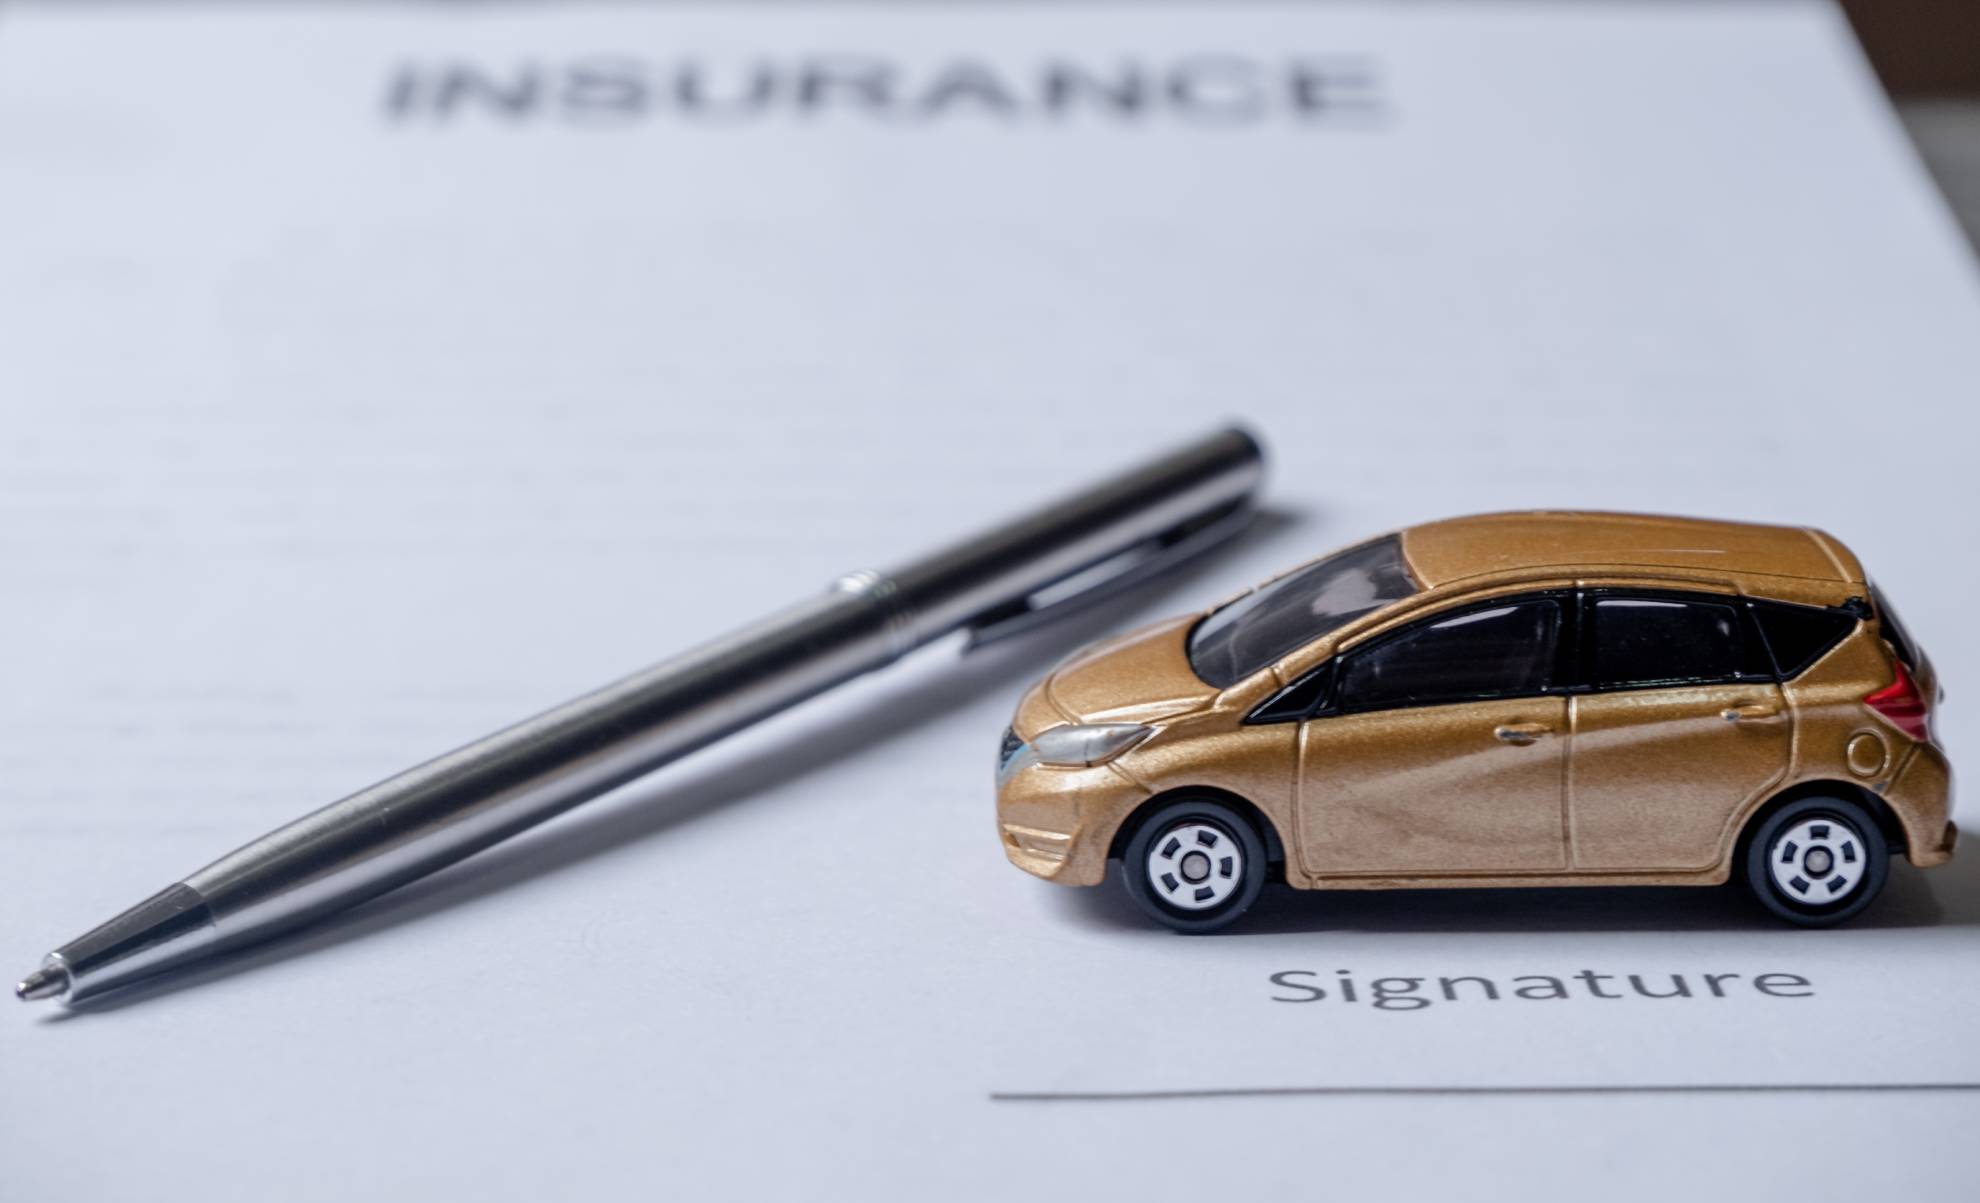 car-and-pen-on-insurance-documents-car-insurance-2021-12-04-17-33-13-utc (1)